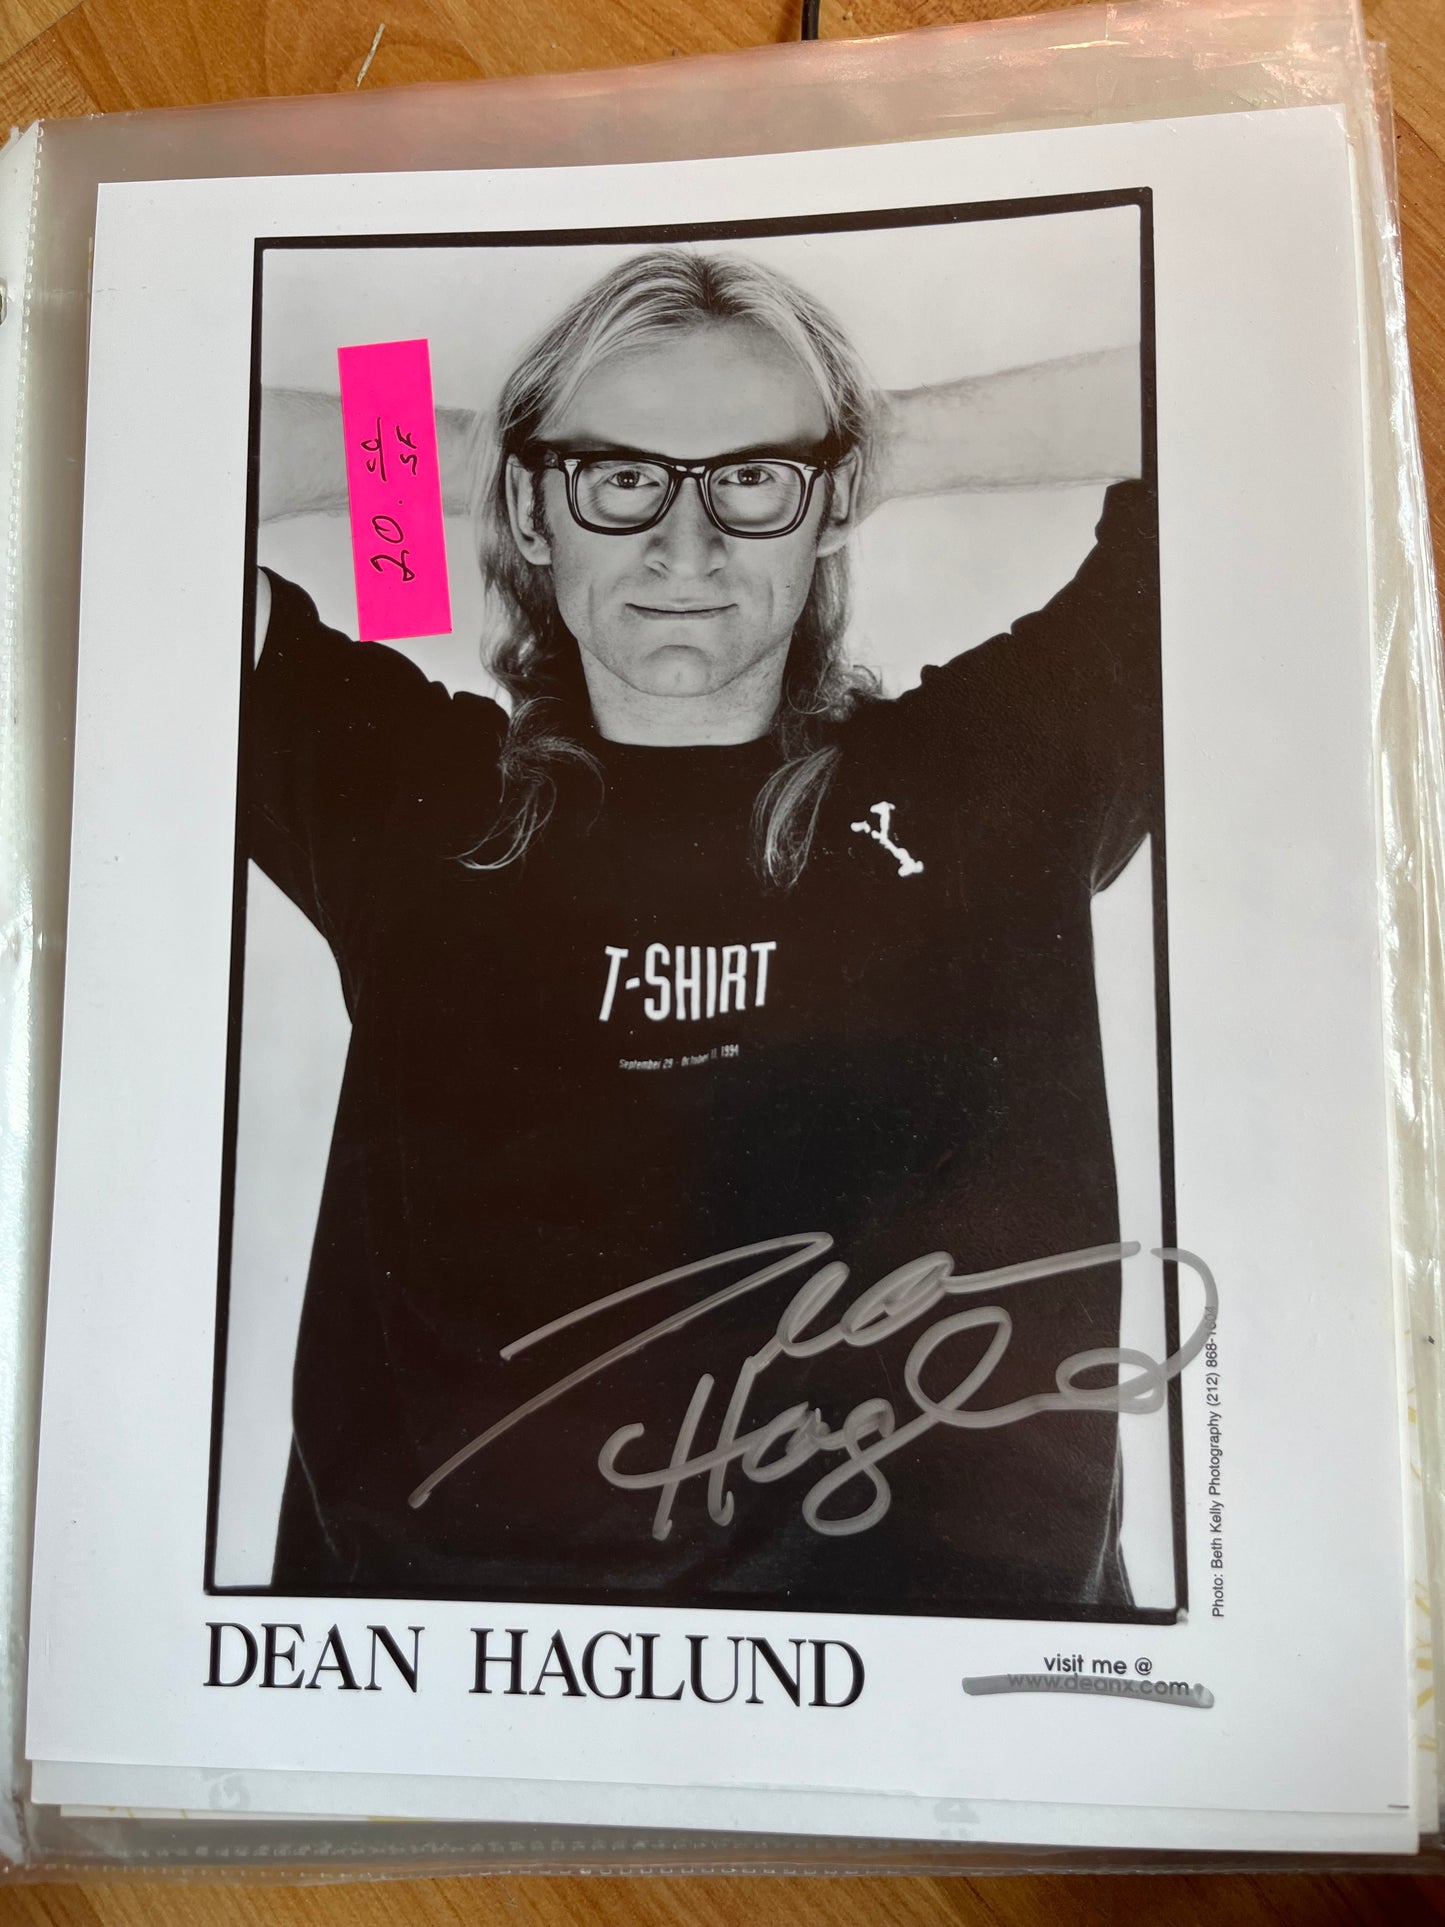 DEAN HAGLUND, The X-Files, autograph